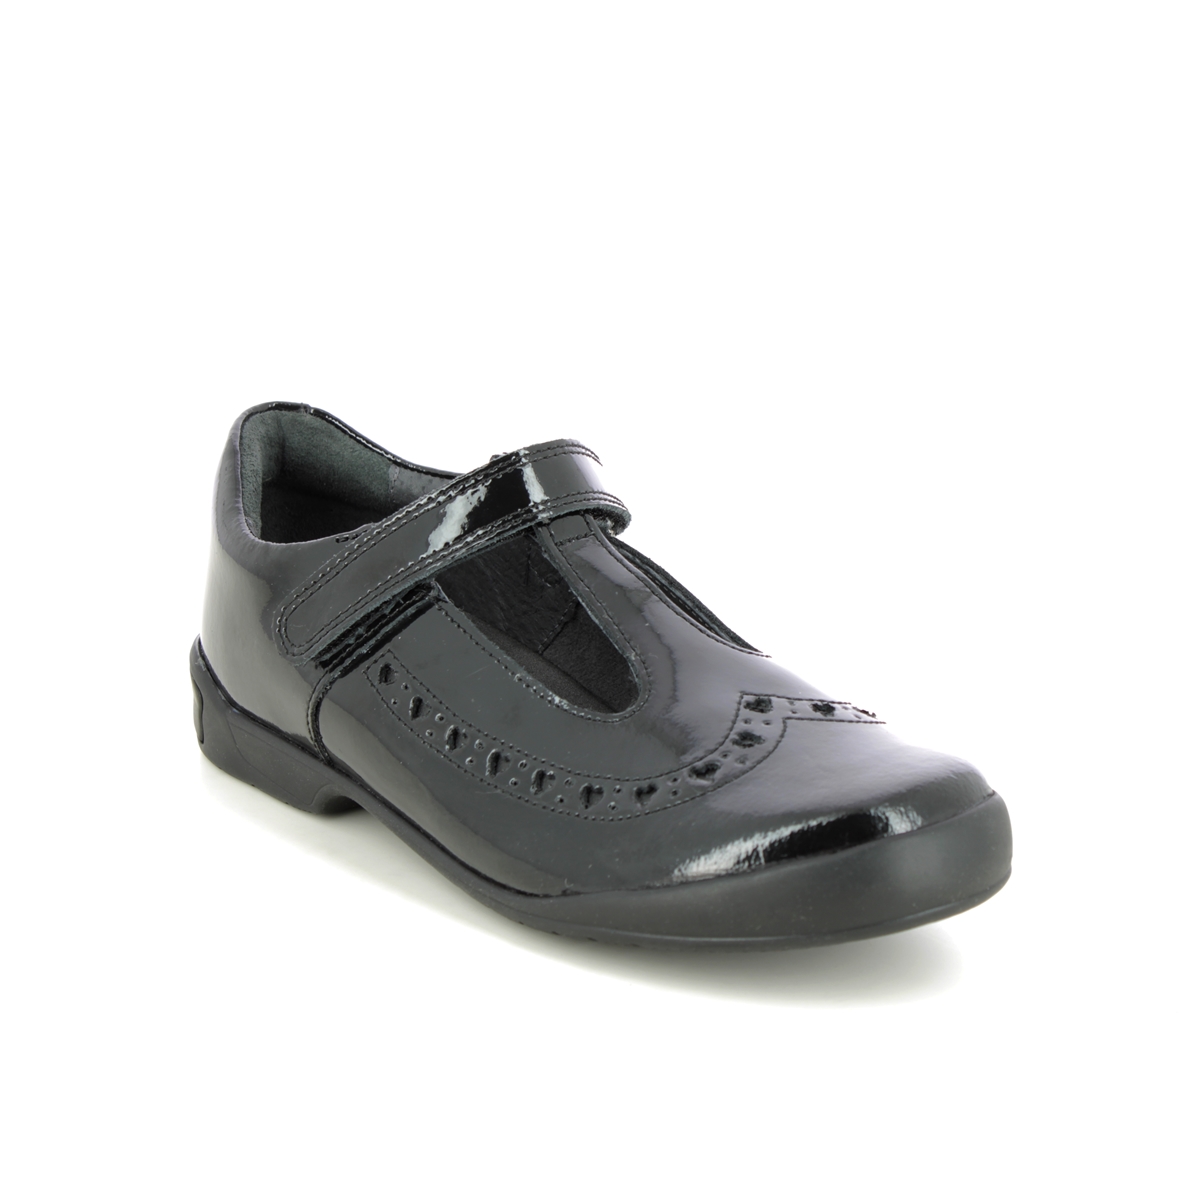 Start Rite - Leapfrog In Black Patent 278937G In Size 2 In Plain Black Patent For School Girls Shoes  In Black Patent For kids